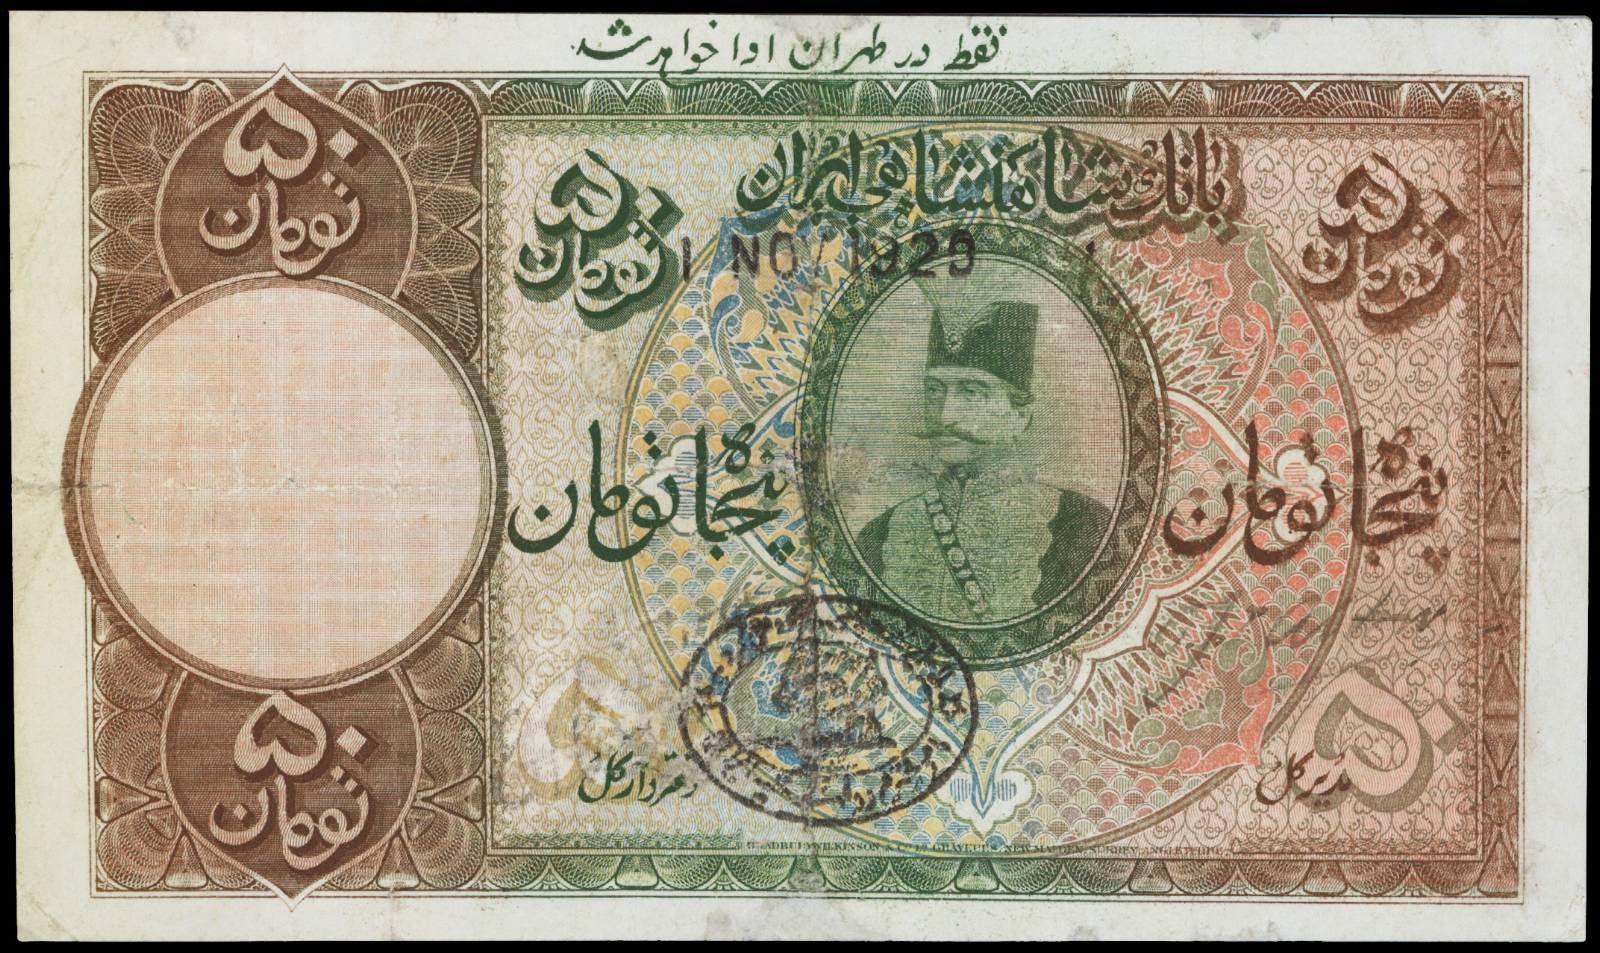 Iran 50 Tomans banknote 1929 Imperial bank of Persia, Naser al-Din Shah